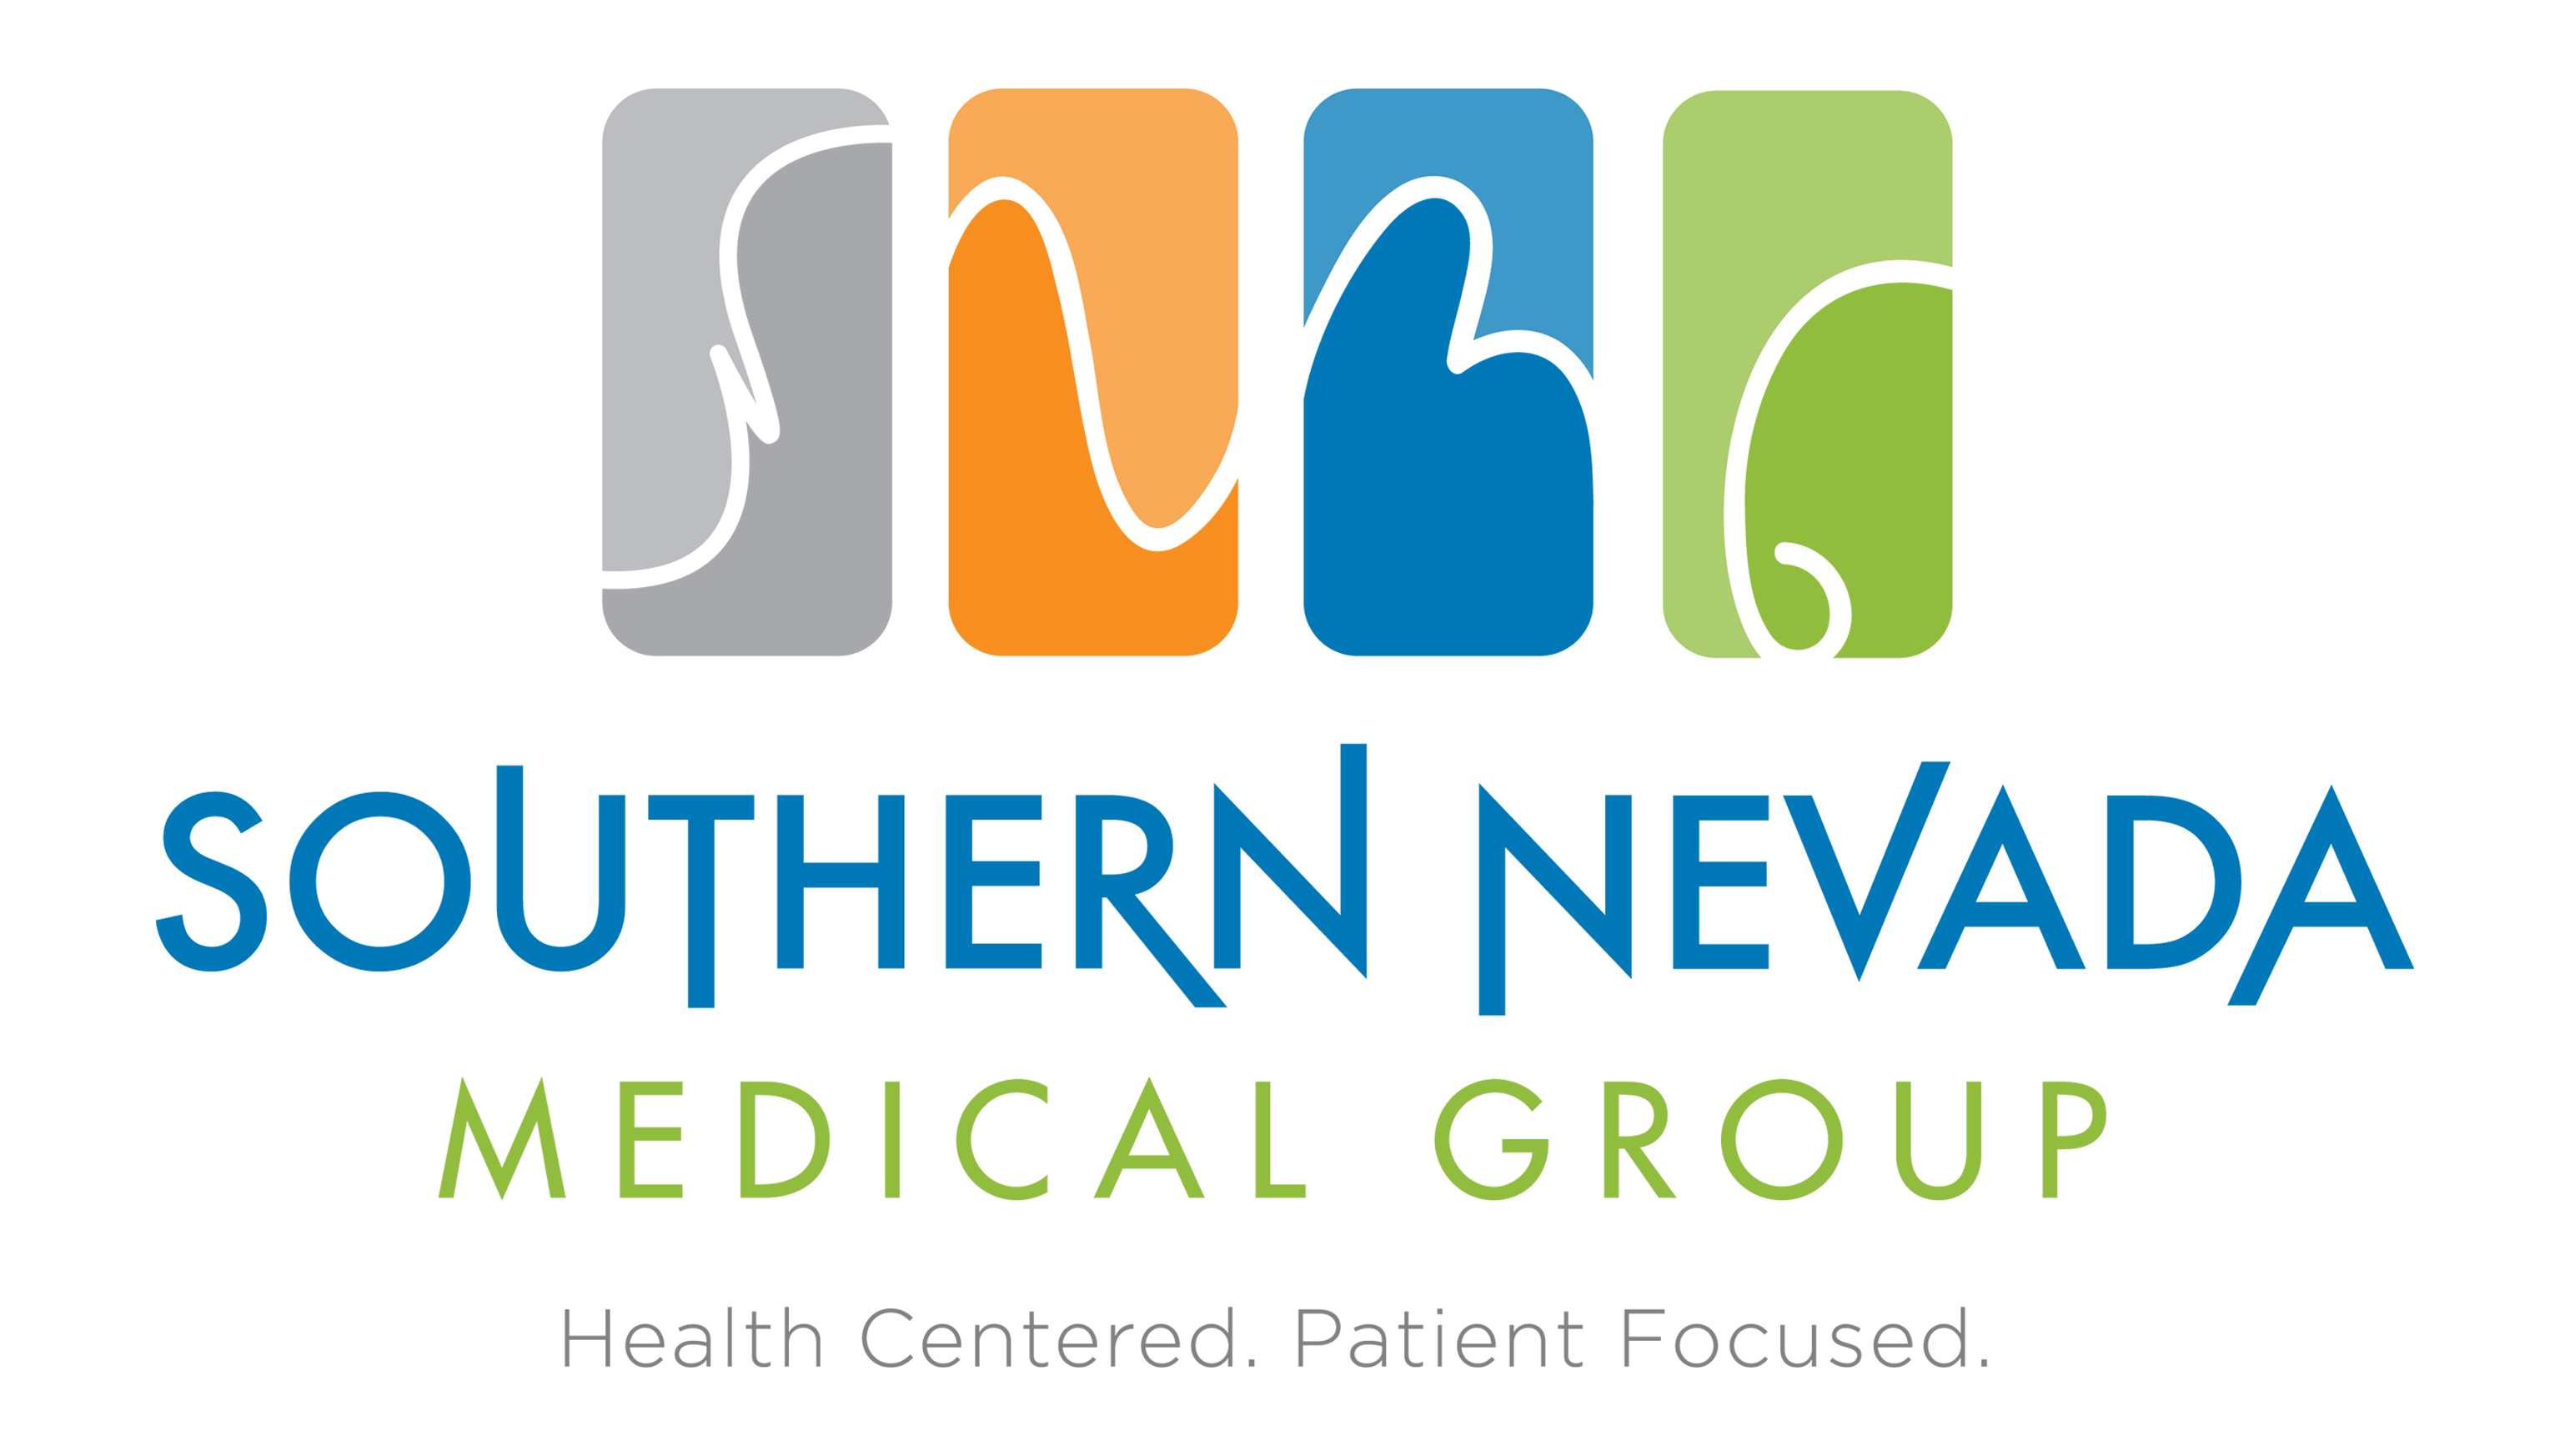 Southern Nevada Medical Group